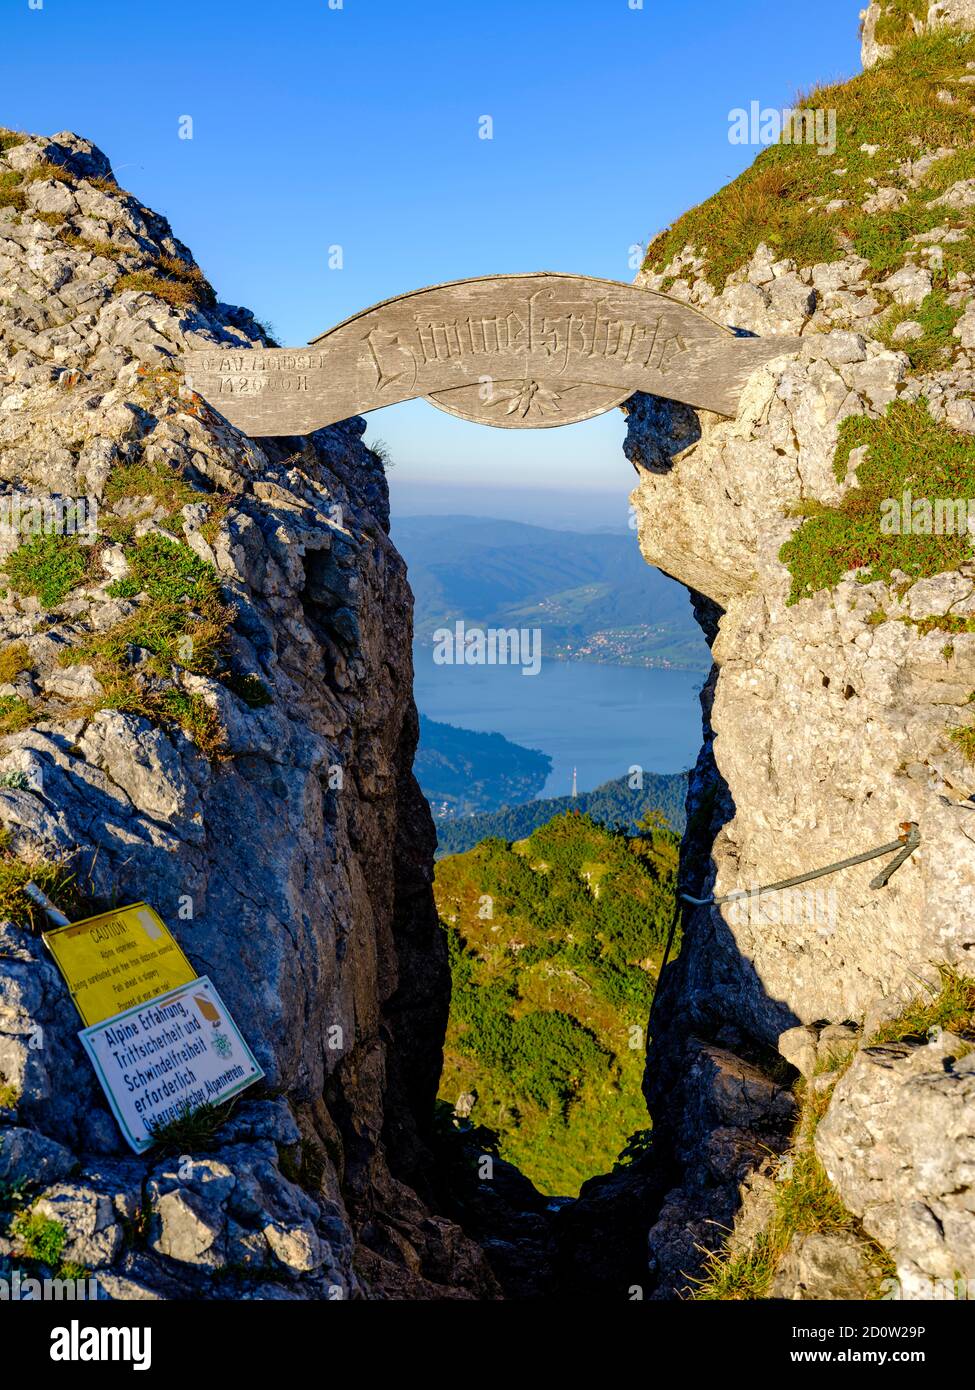 Himmelspforte am Schafberg, Salzkammergut, Salzburger Land, Austria, Europe Stock Photo